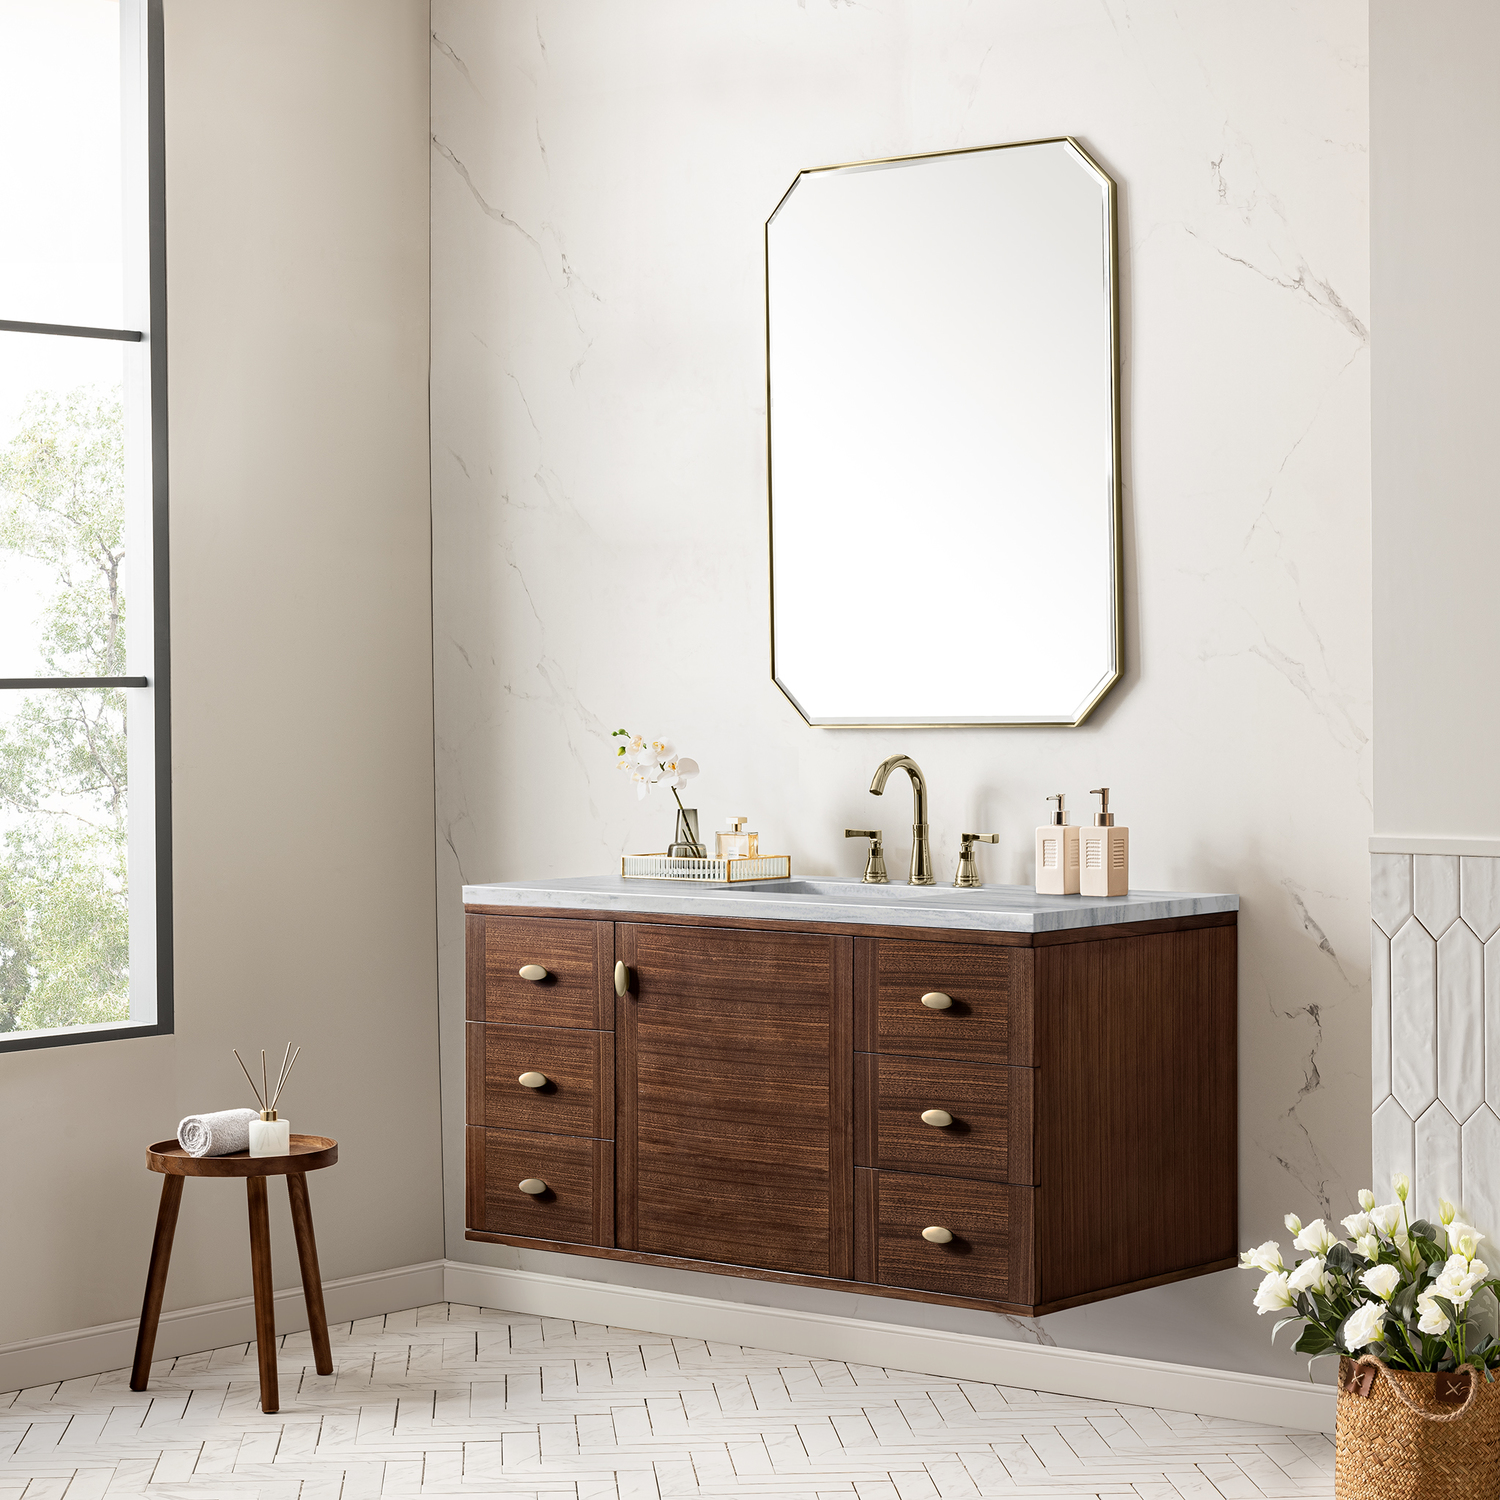 bathroom cabinets prices James Martin Vanity Mid-Century Walnut Mid-Century Modern